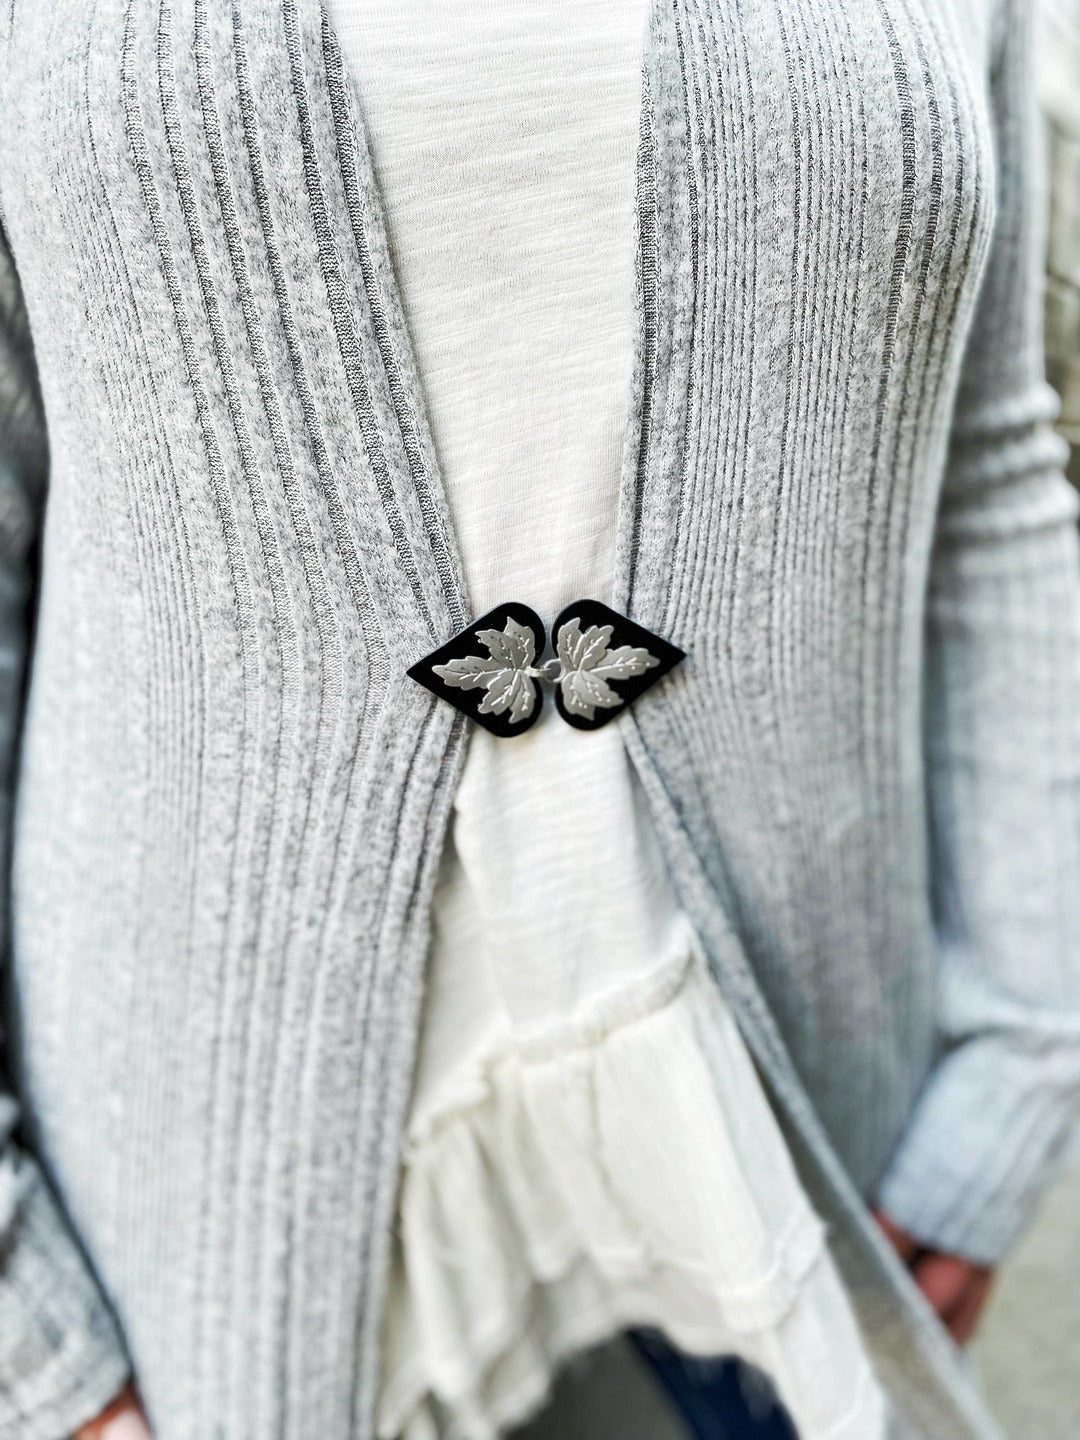 KardiKlips - Sweater Clip - Silver Metal Leaf on Black Leather